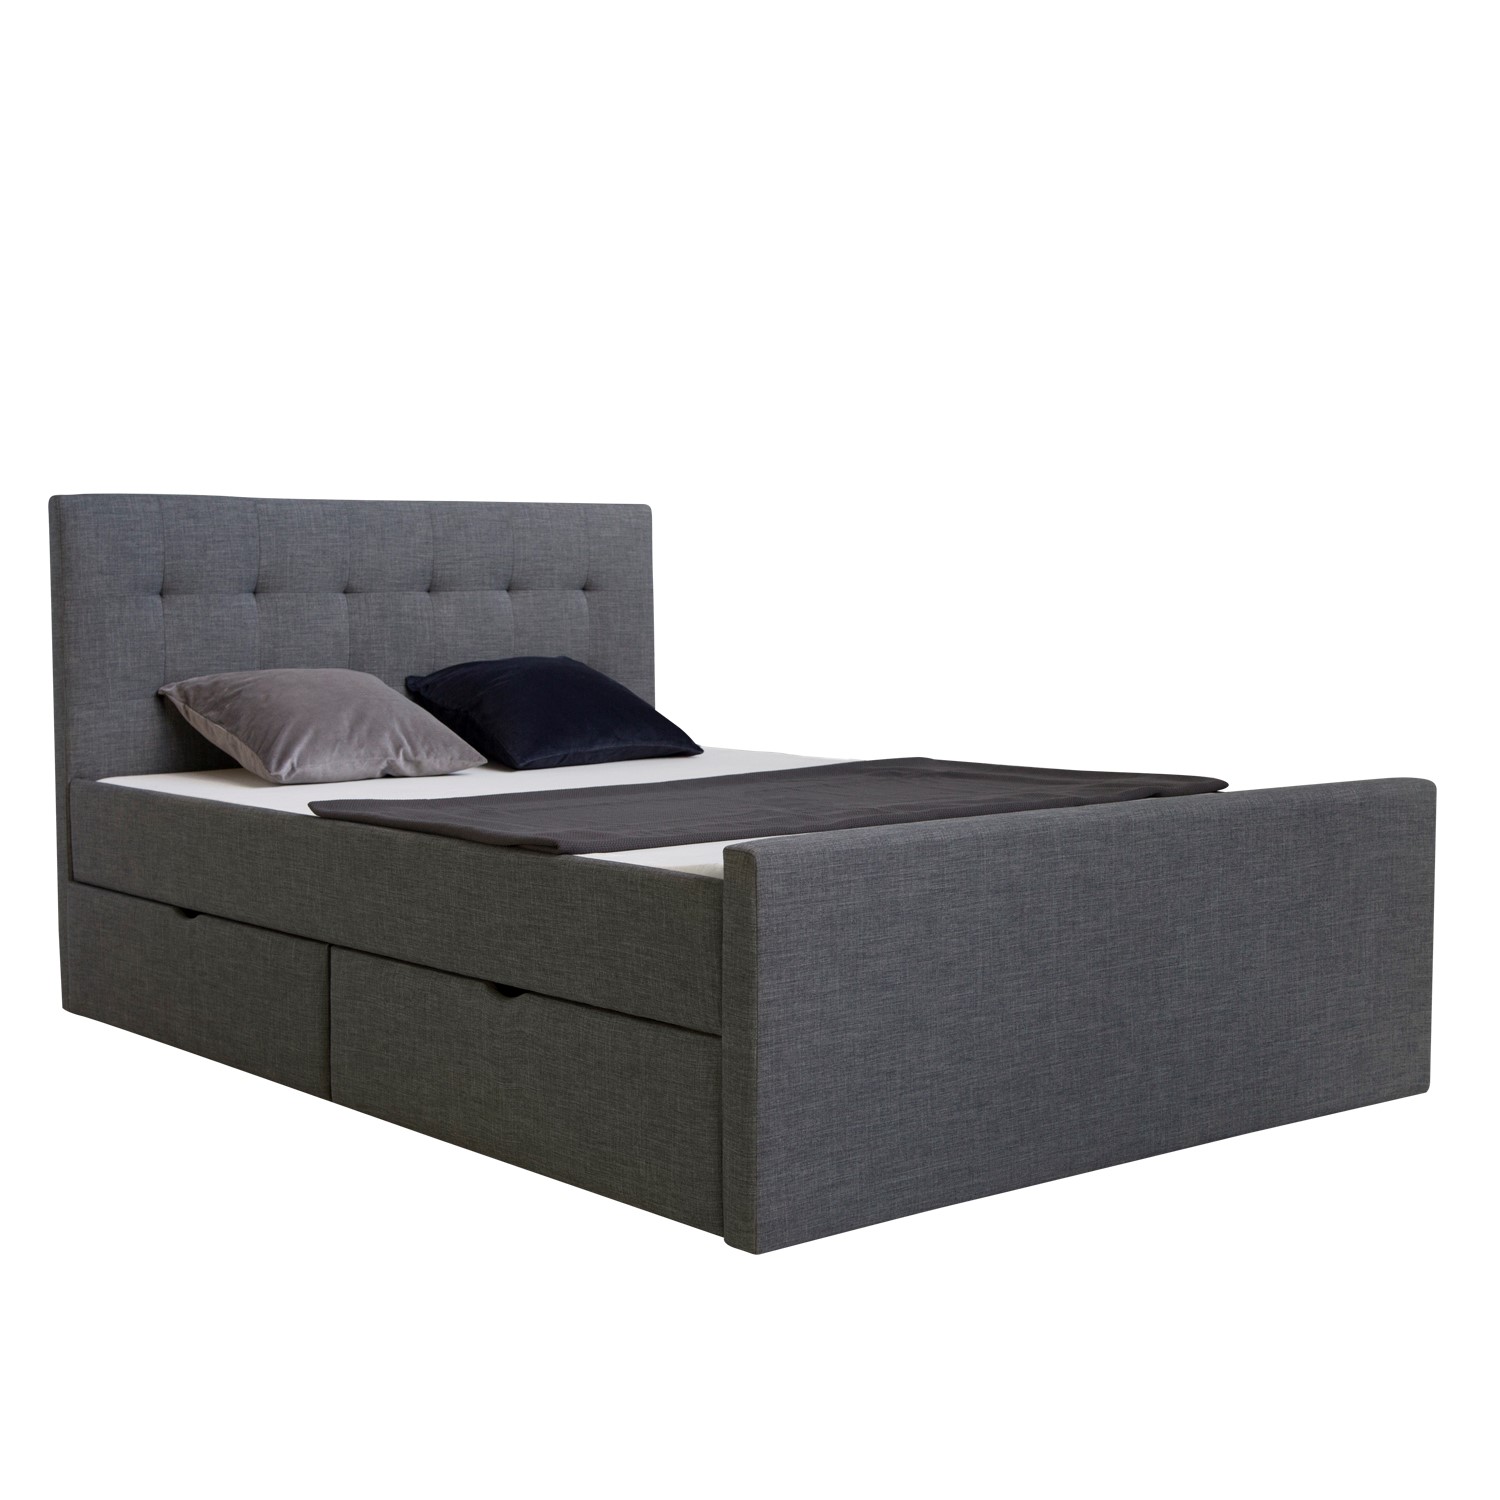 Upholstered Bed Double Bed Frame 140 x 200 Dark Grey 4 Drawers Slatted Frame